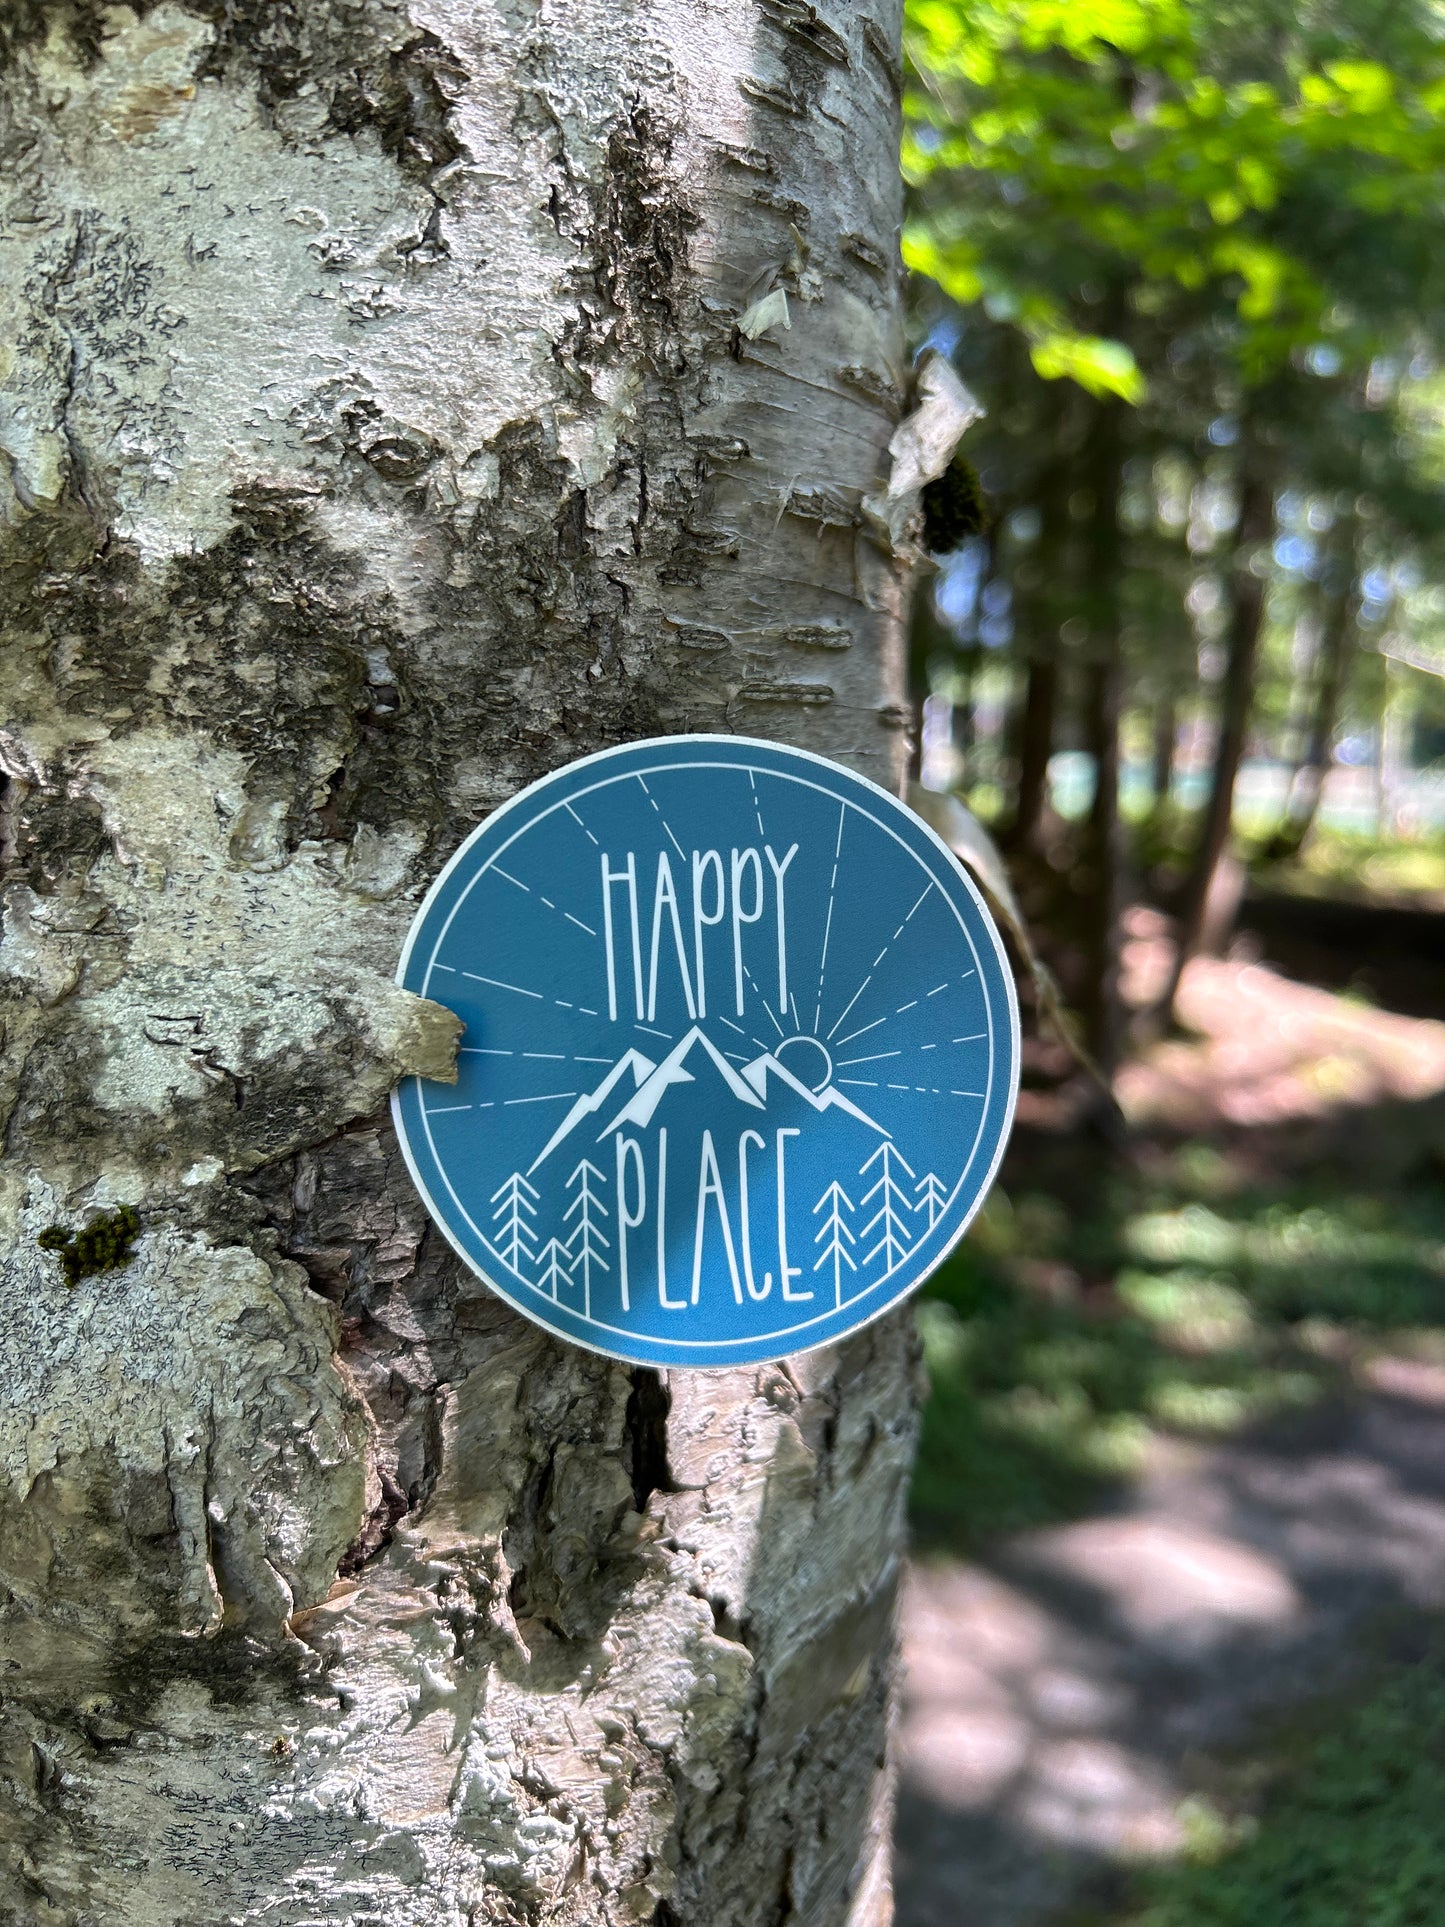 Happy Place Sticker - Blue